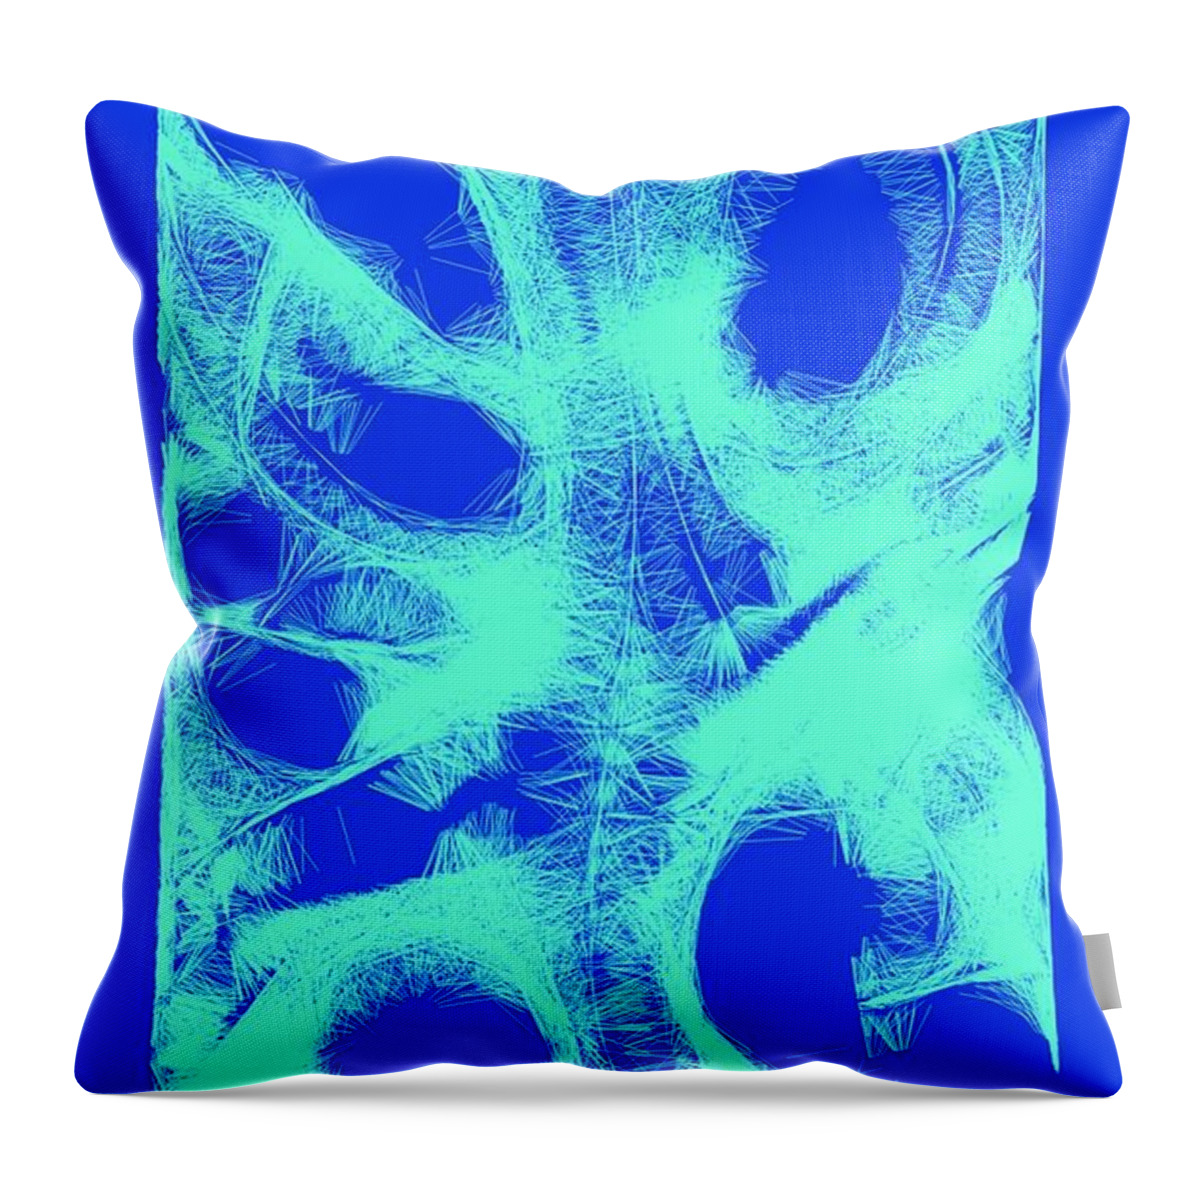 Butterfly Throw Pillow featuring the digital art Buterfly blue by Ljev Rjadcenko